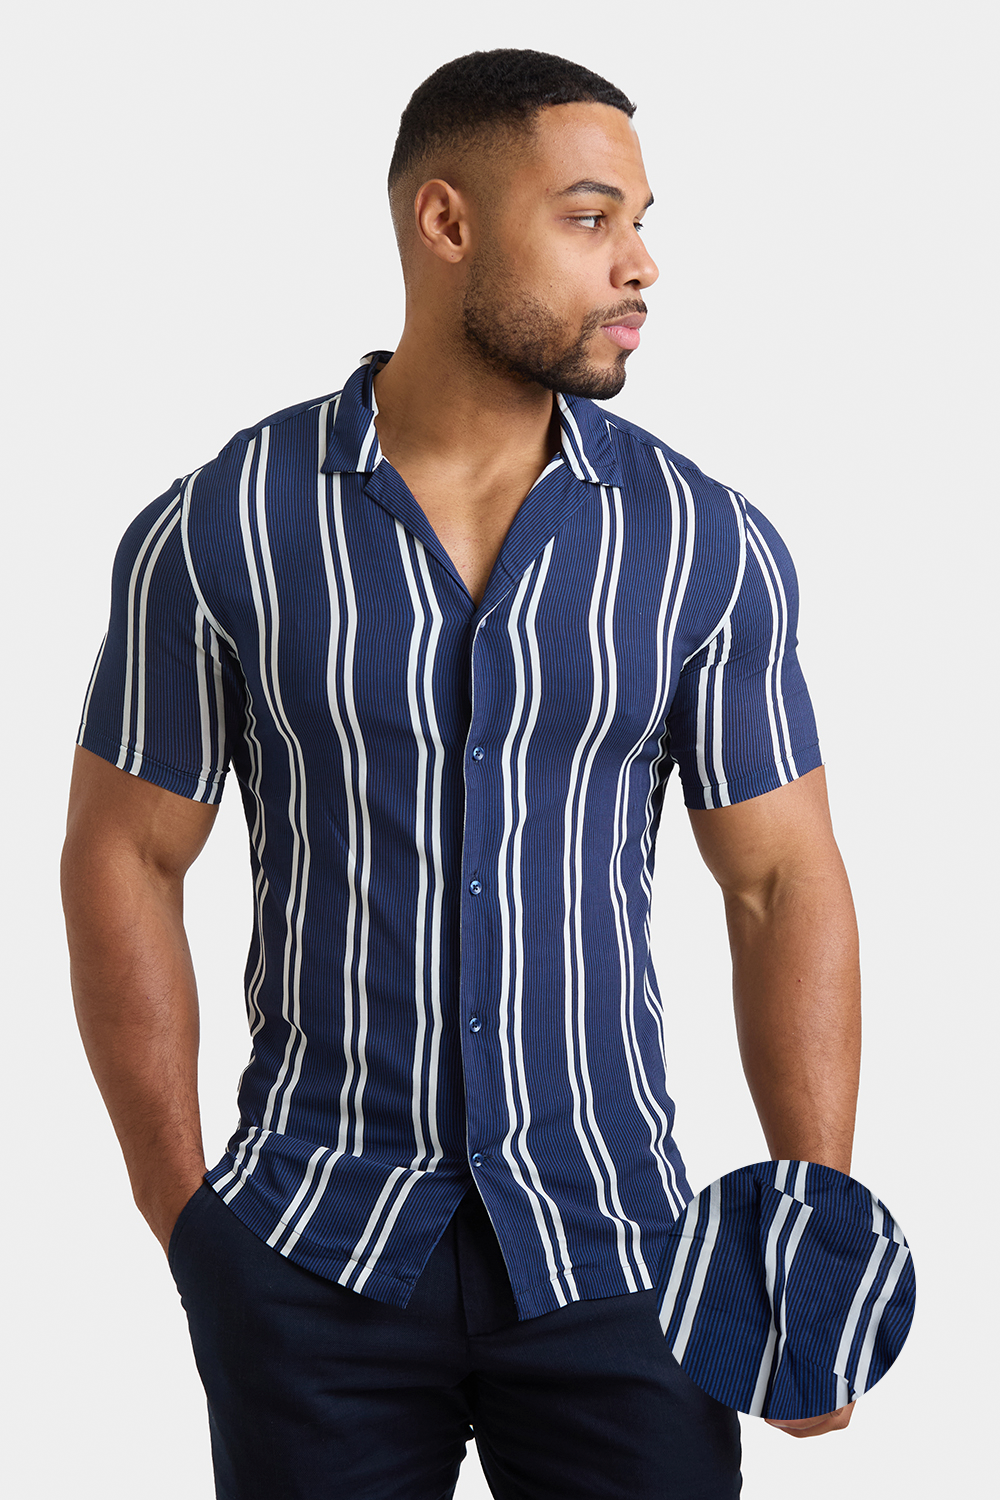 Printed Shirt in Navy Retro Stripe - TAILORED ATHLETE - ROW